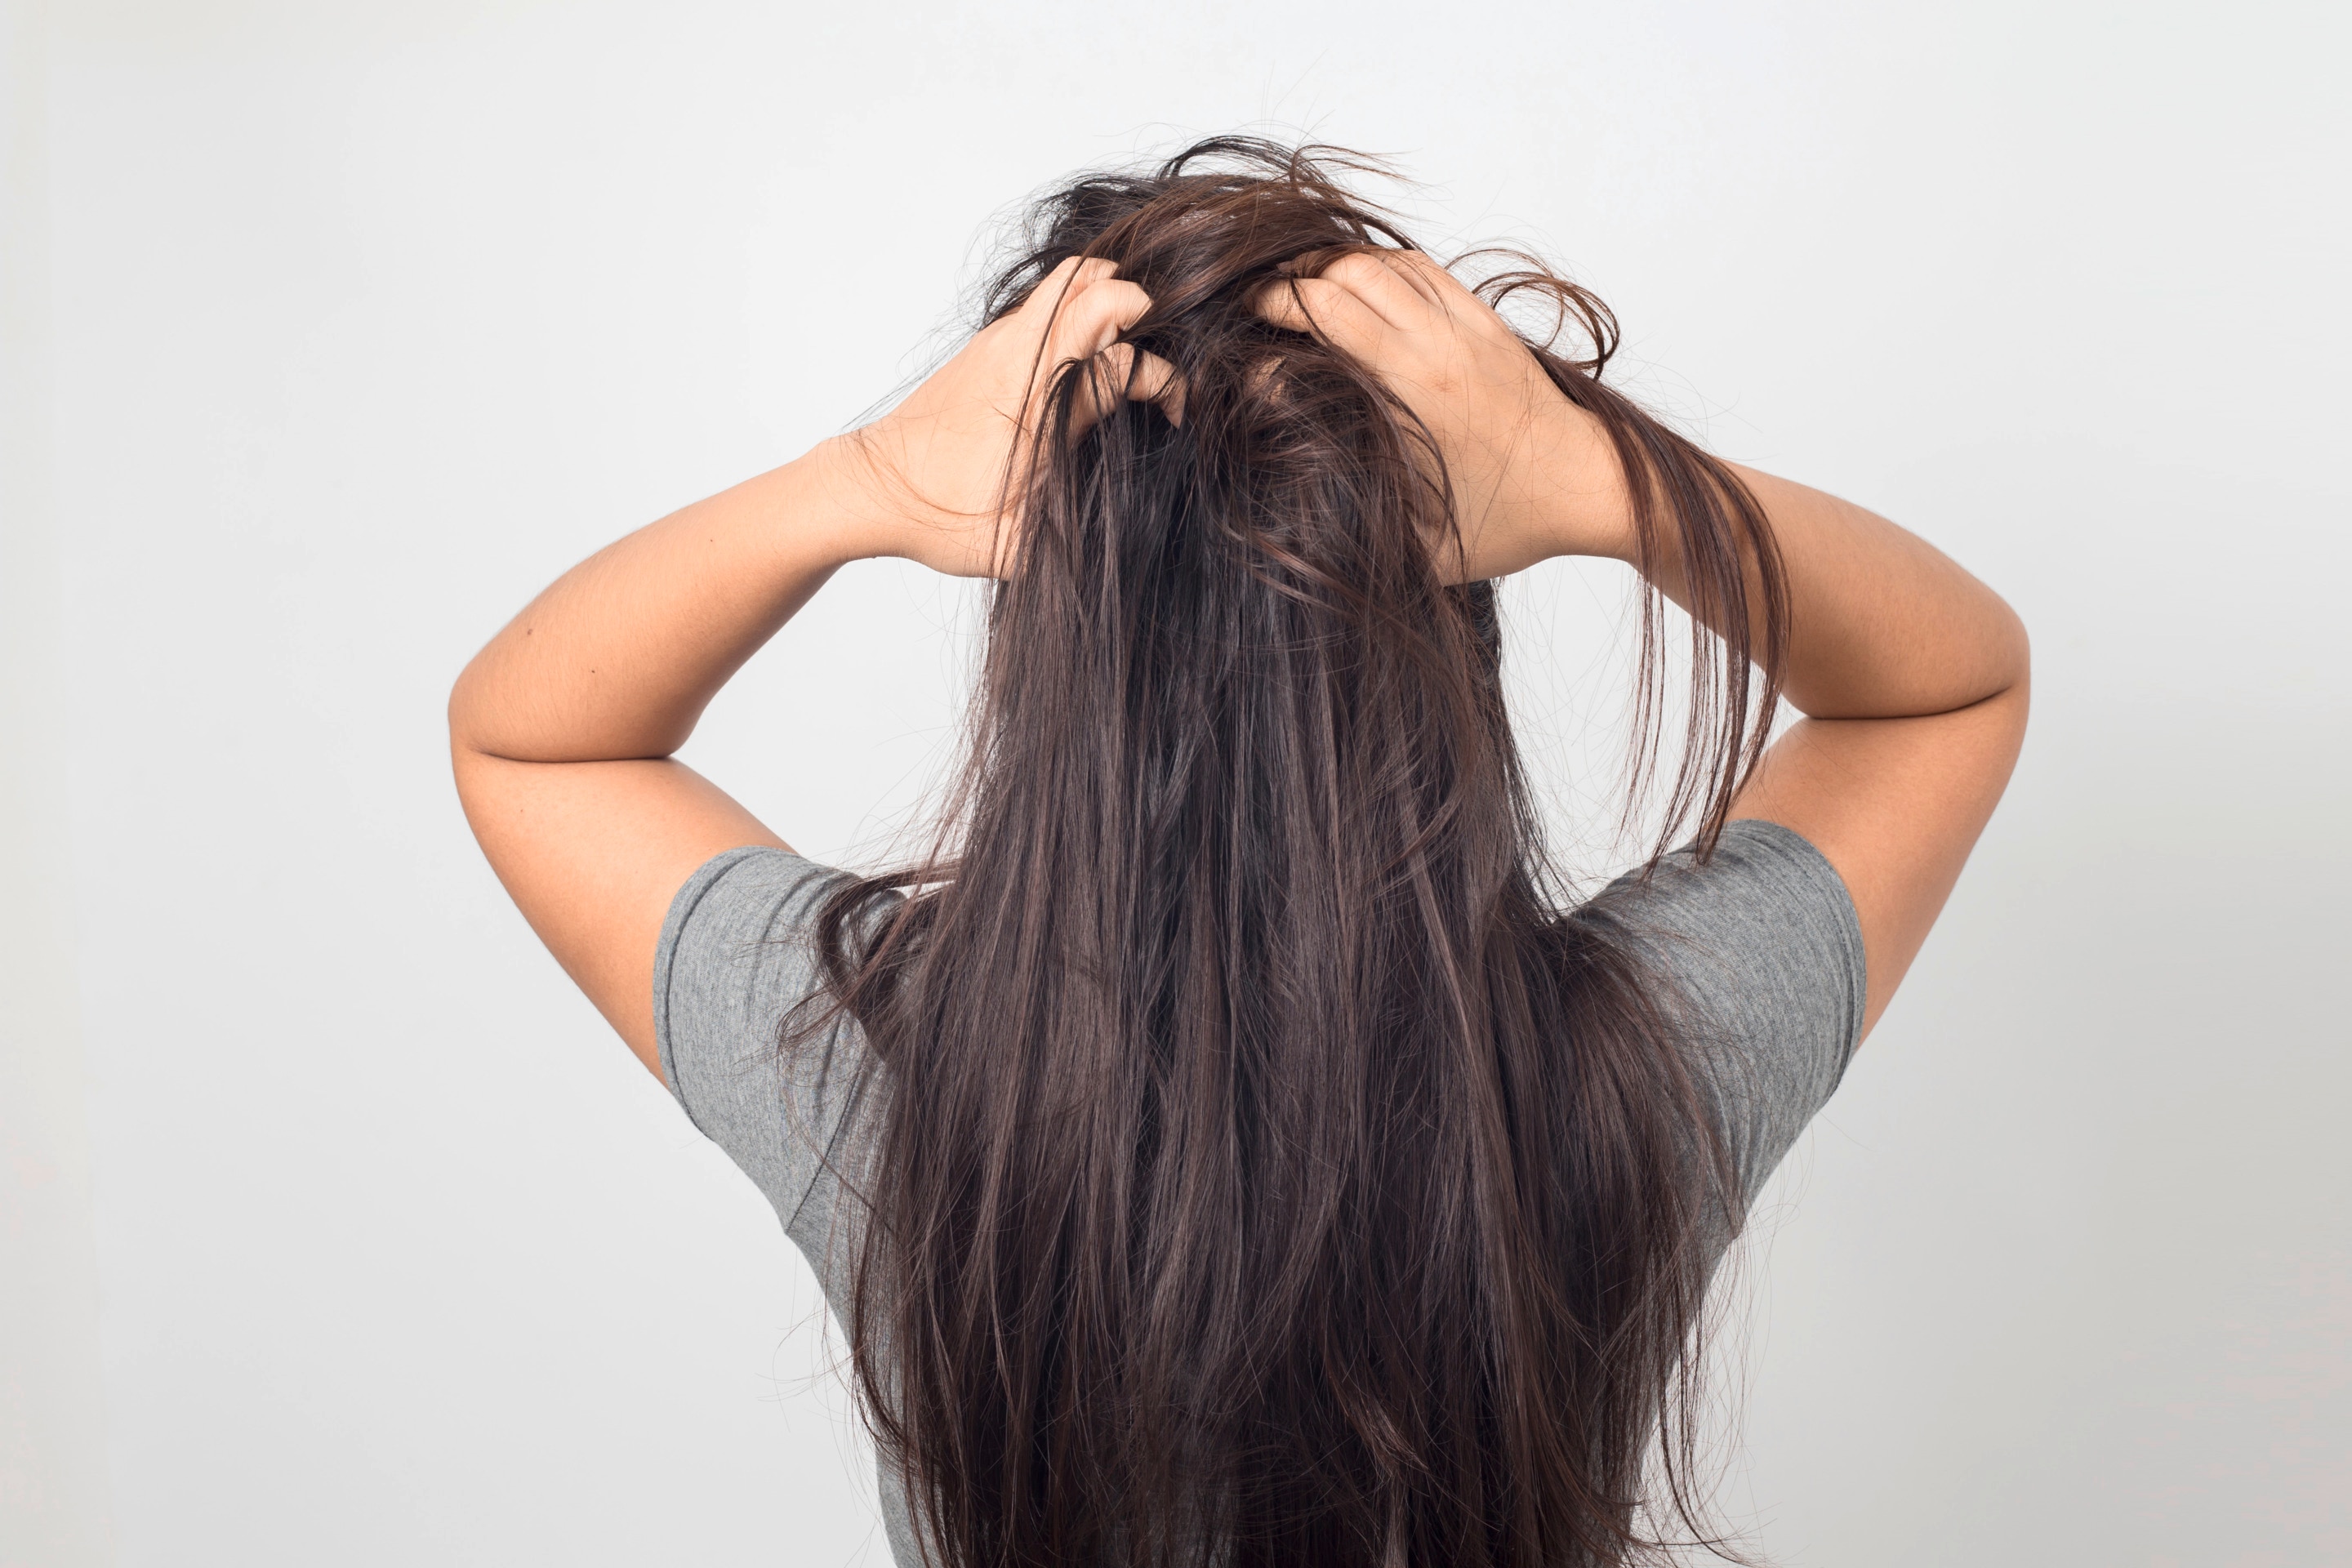 Wanita dengan kulit kepala gatal menggaruk rambut